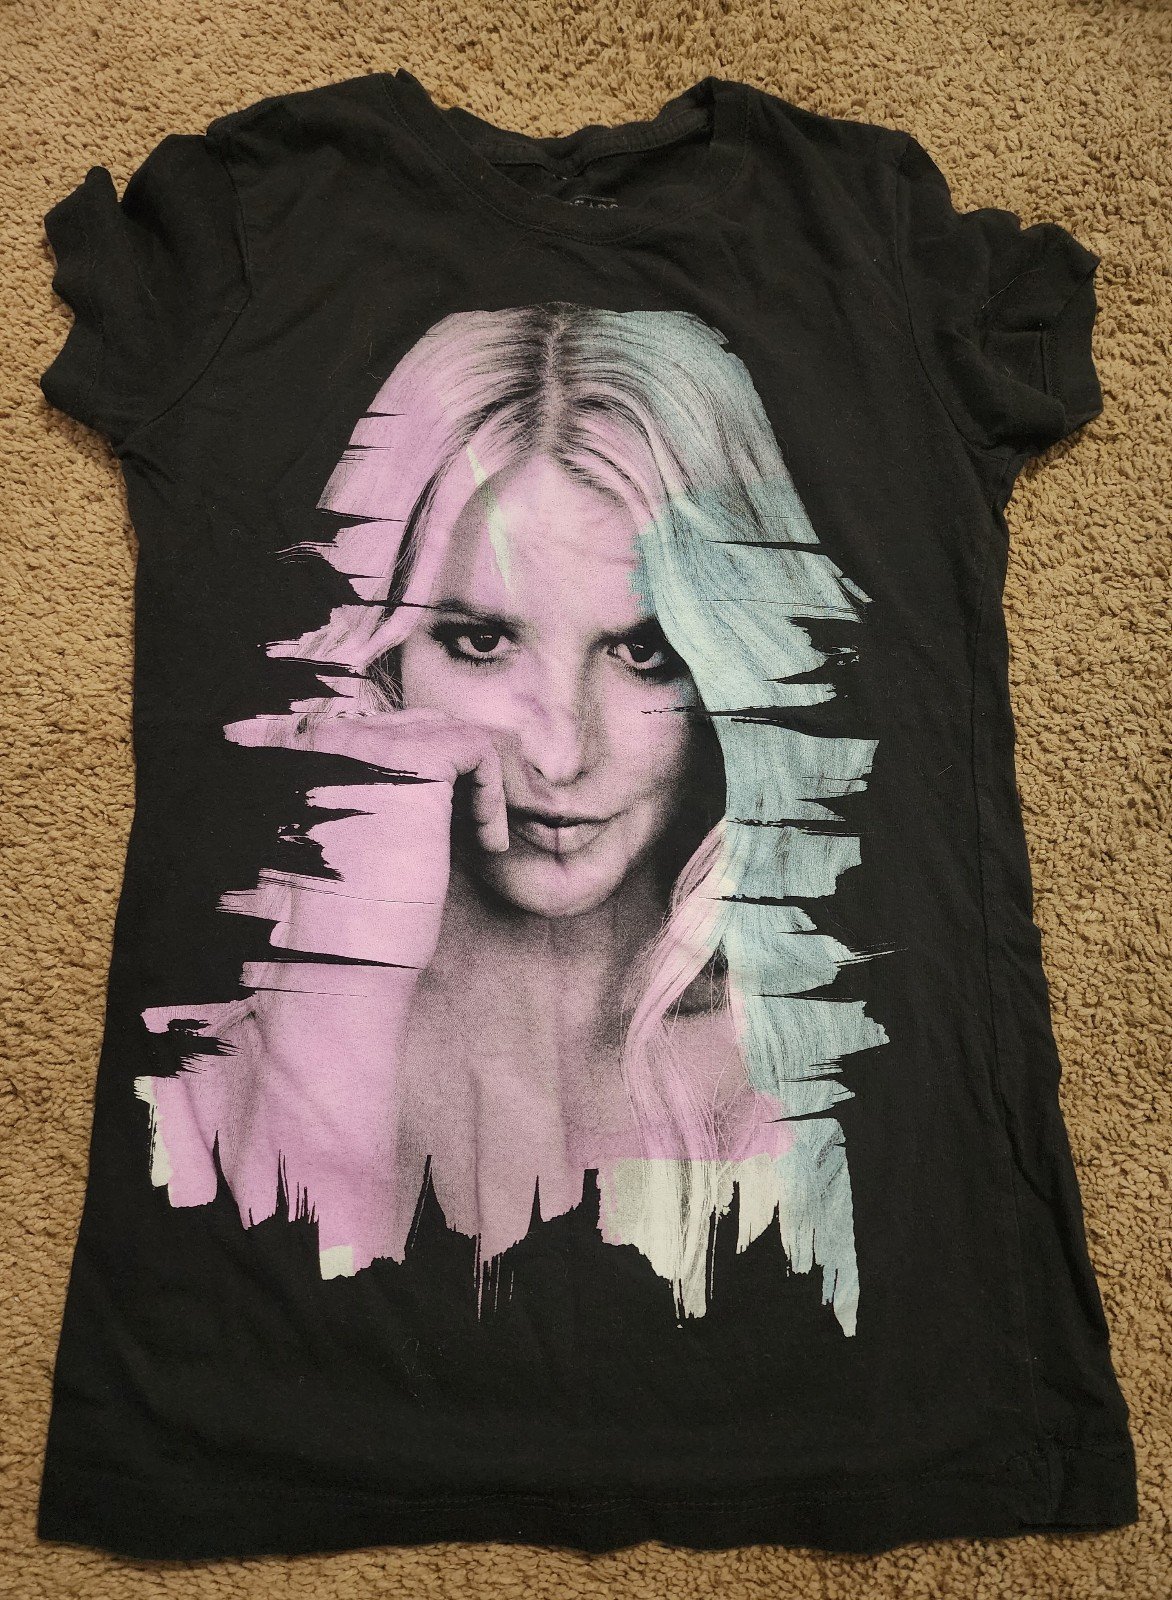 Fashion Britney Spears tshirt size small gh1oE2fAD no t